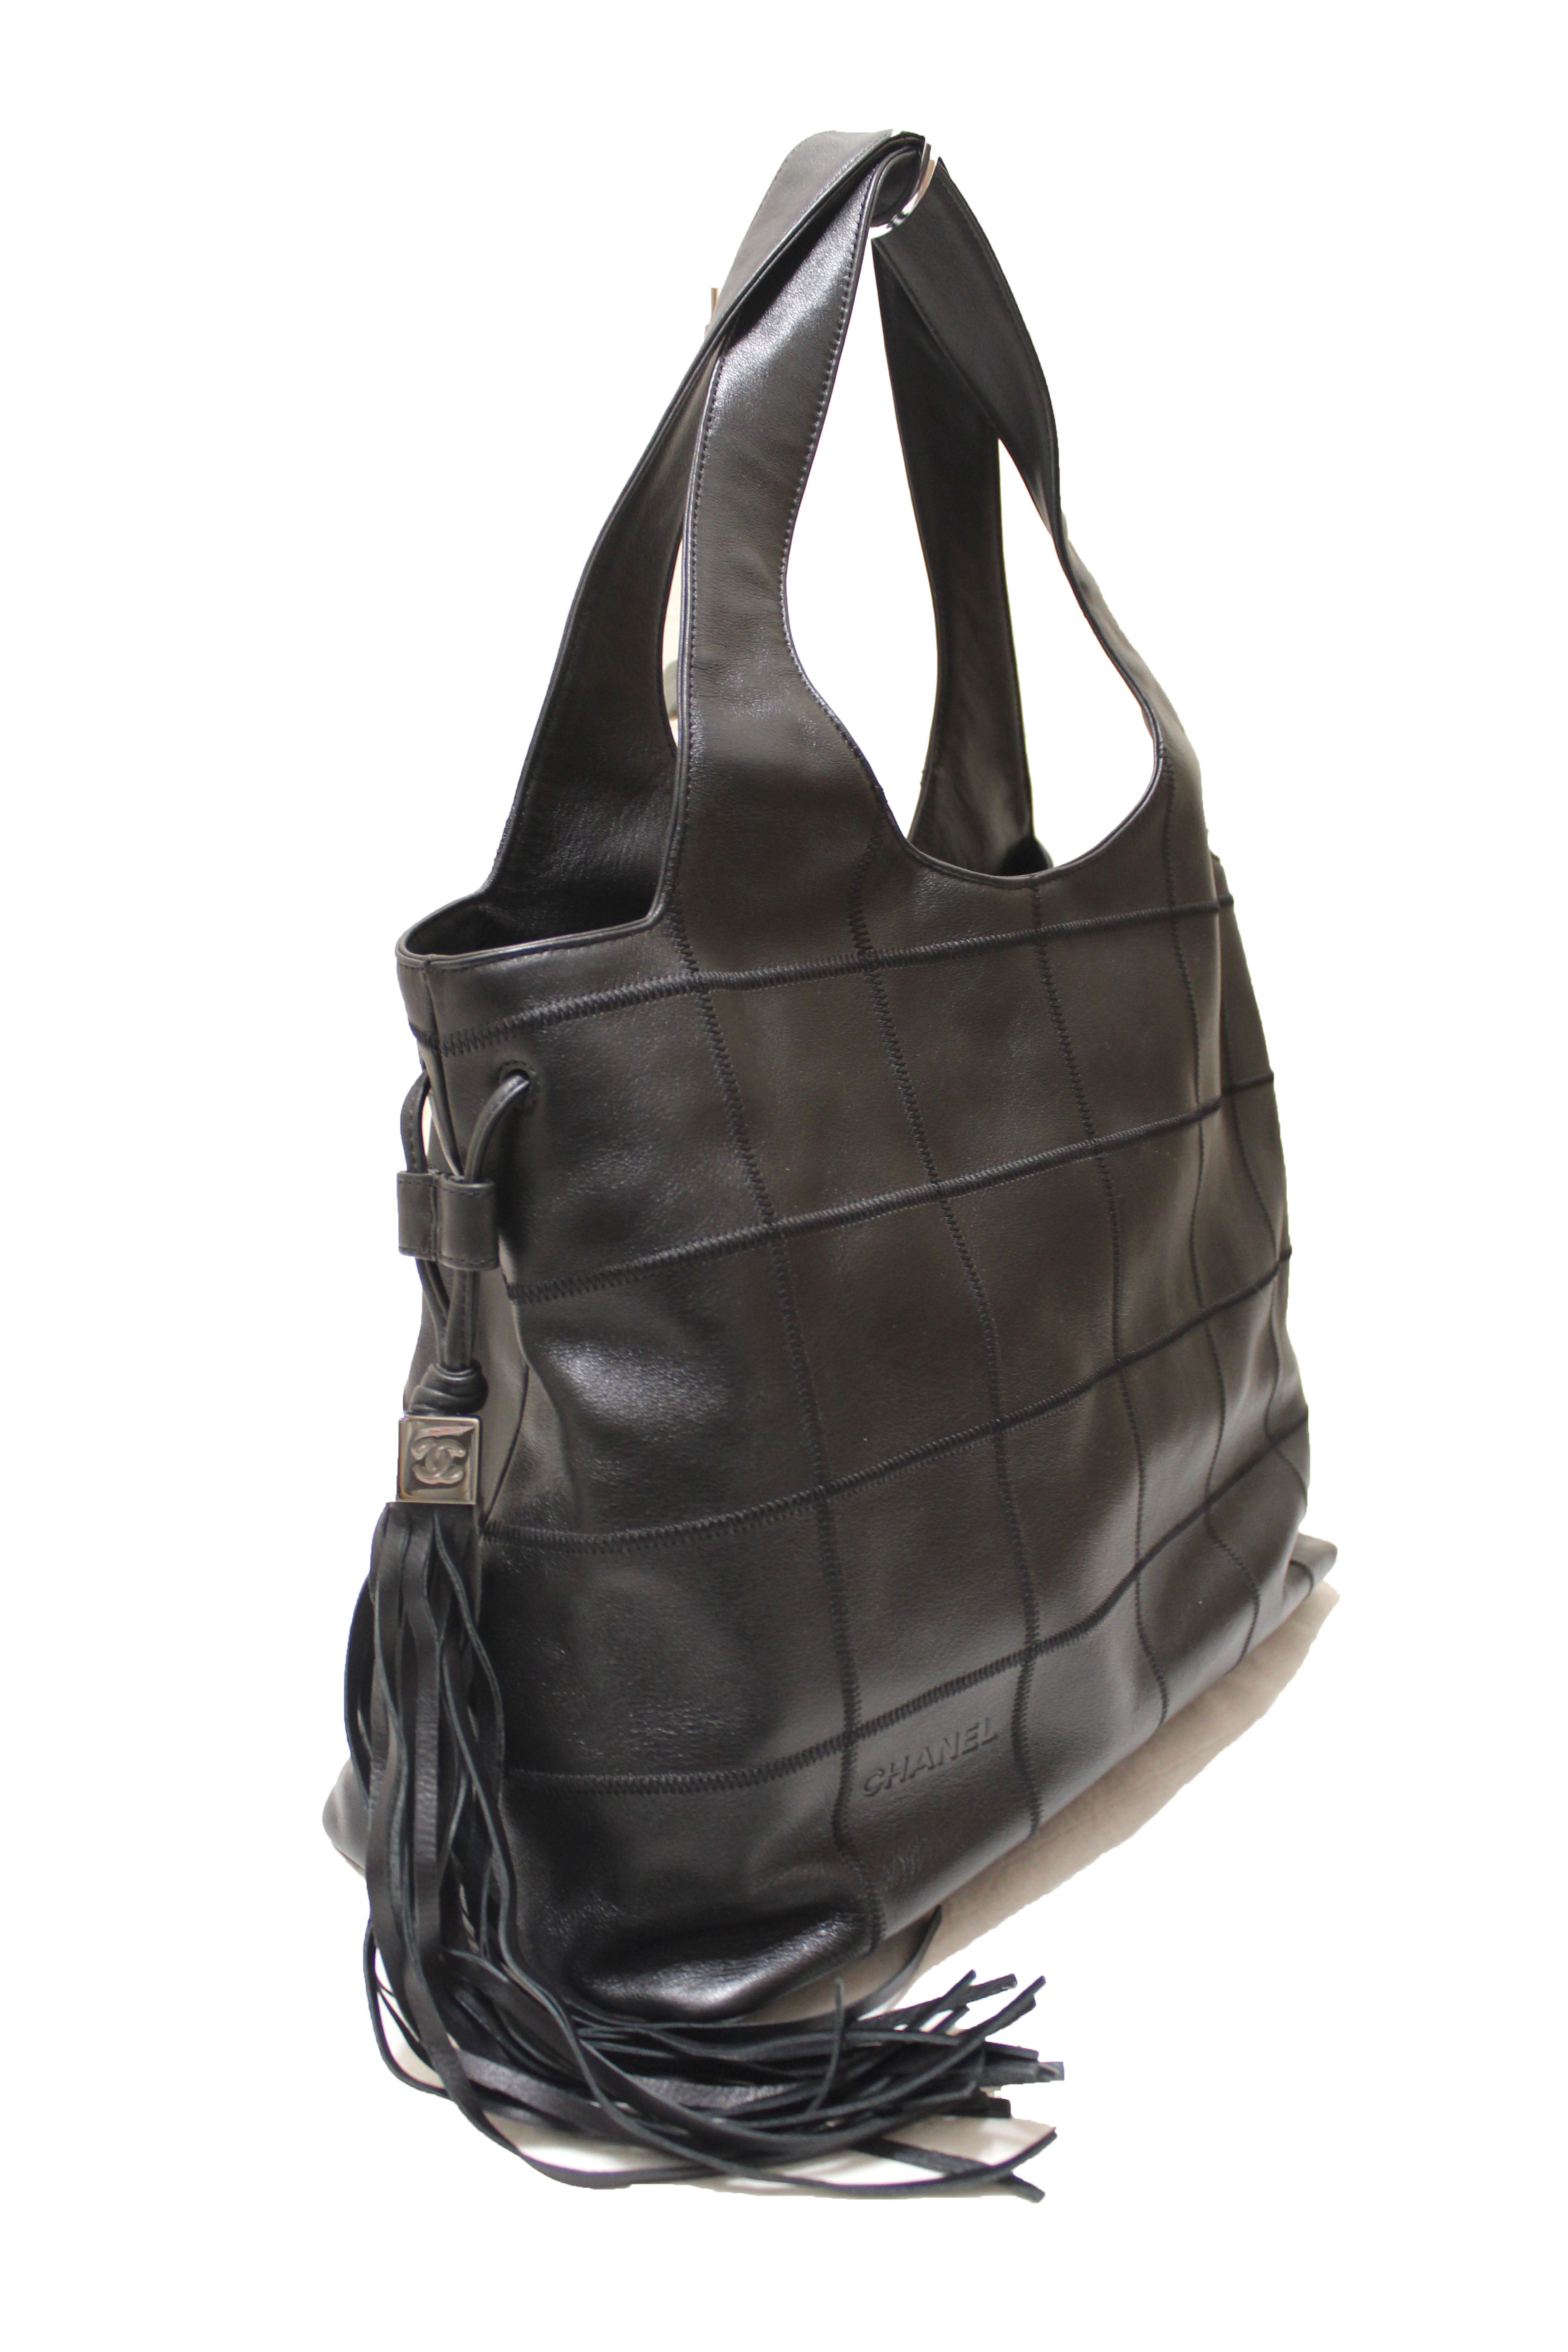 Authentic Chanel Square Stitch Tassel Leather Hobo Shoulder Bag – Paris  Station Shop